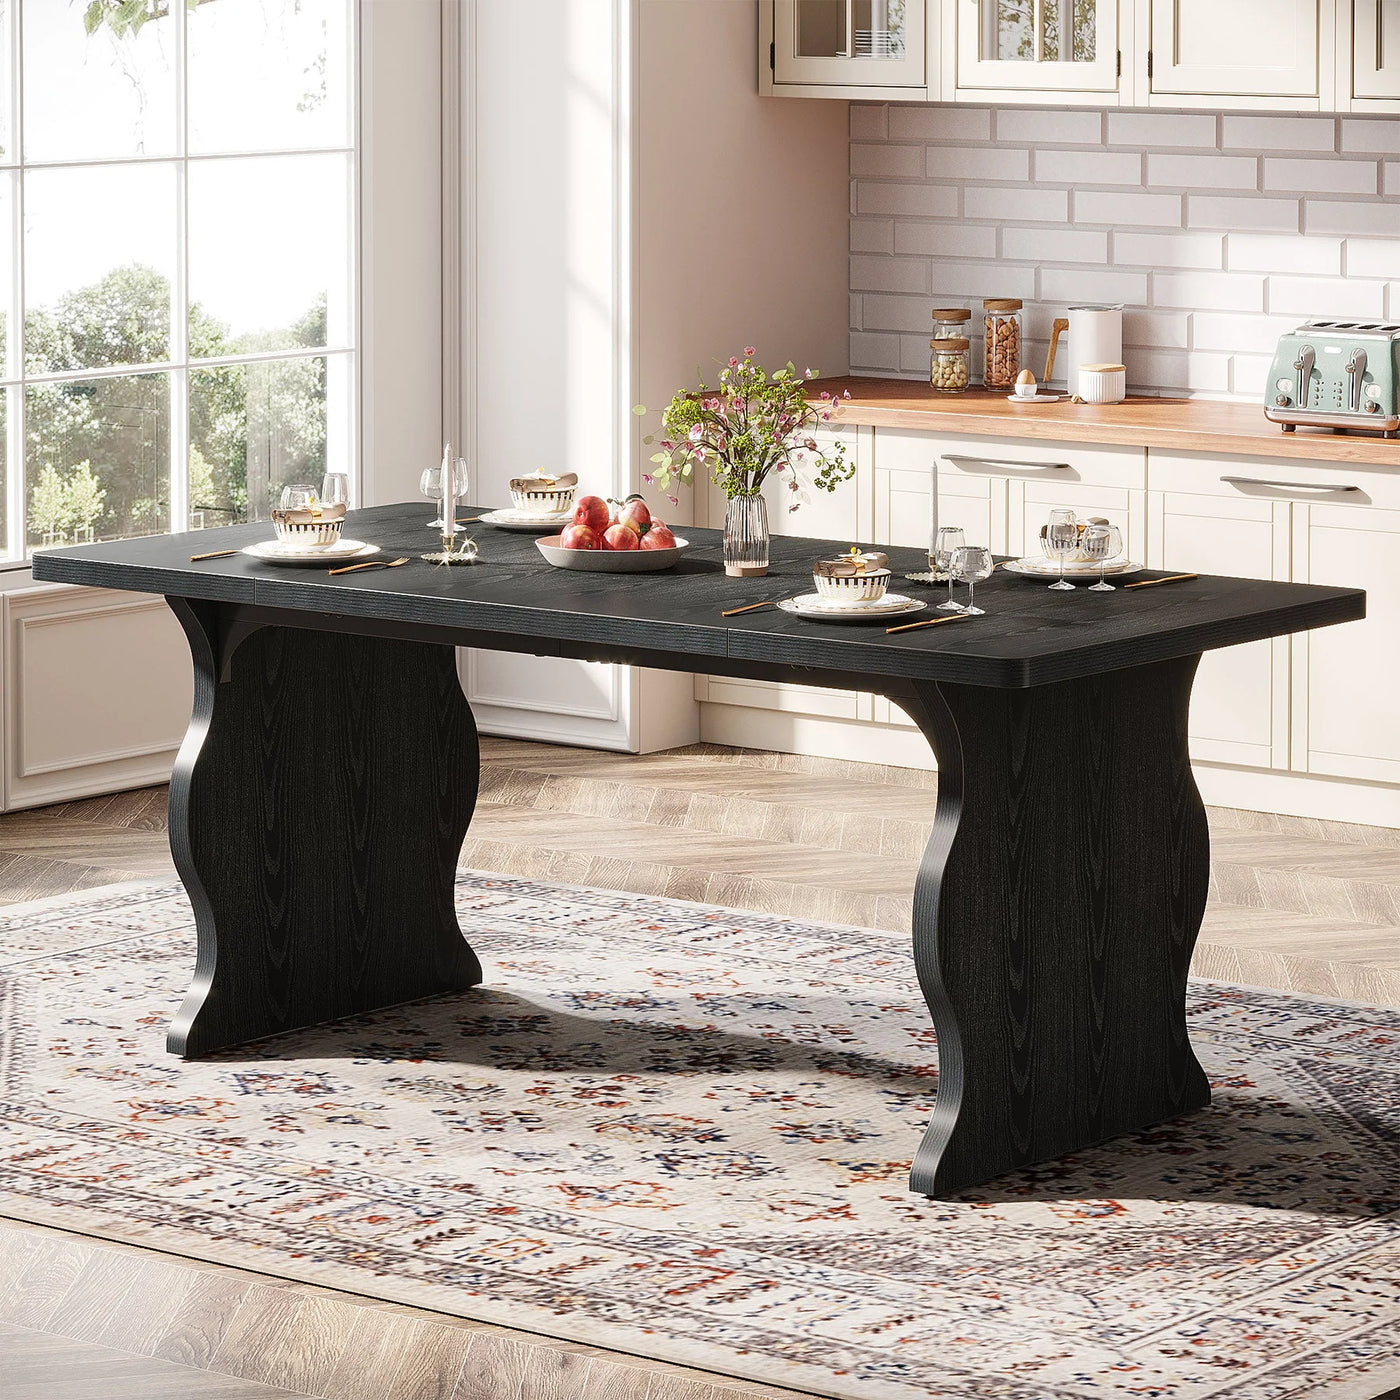 Highlight 63" Dining Table | Modern Black Wood Rectangular Kitchen Table for 4-6